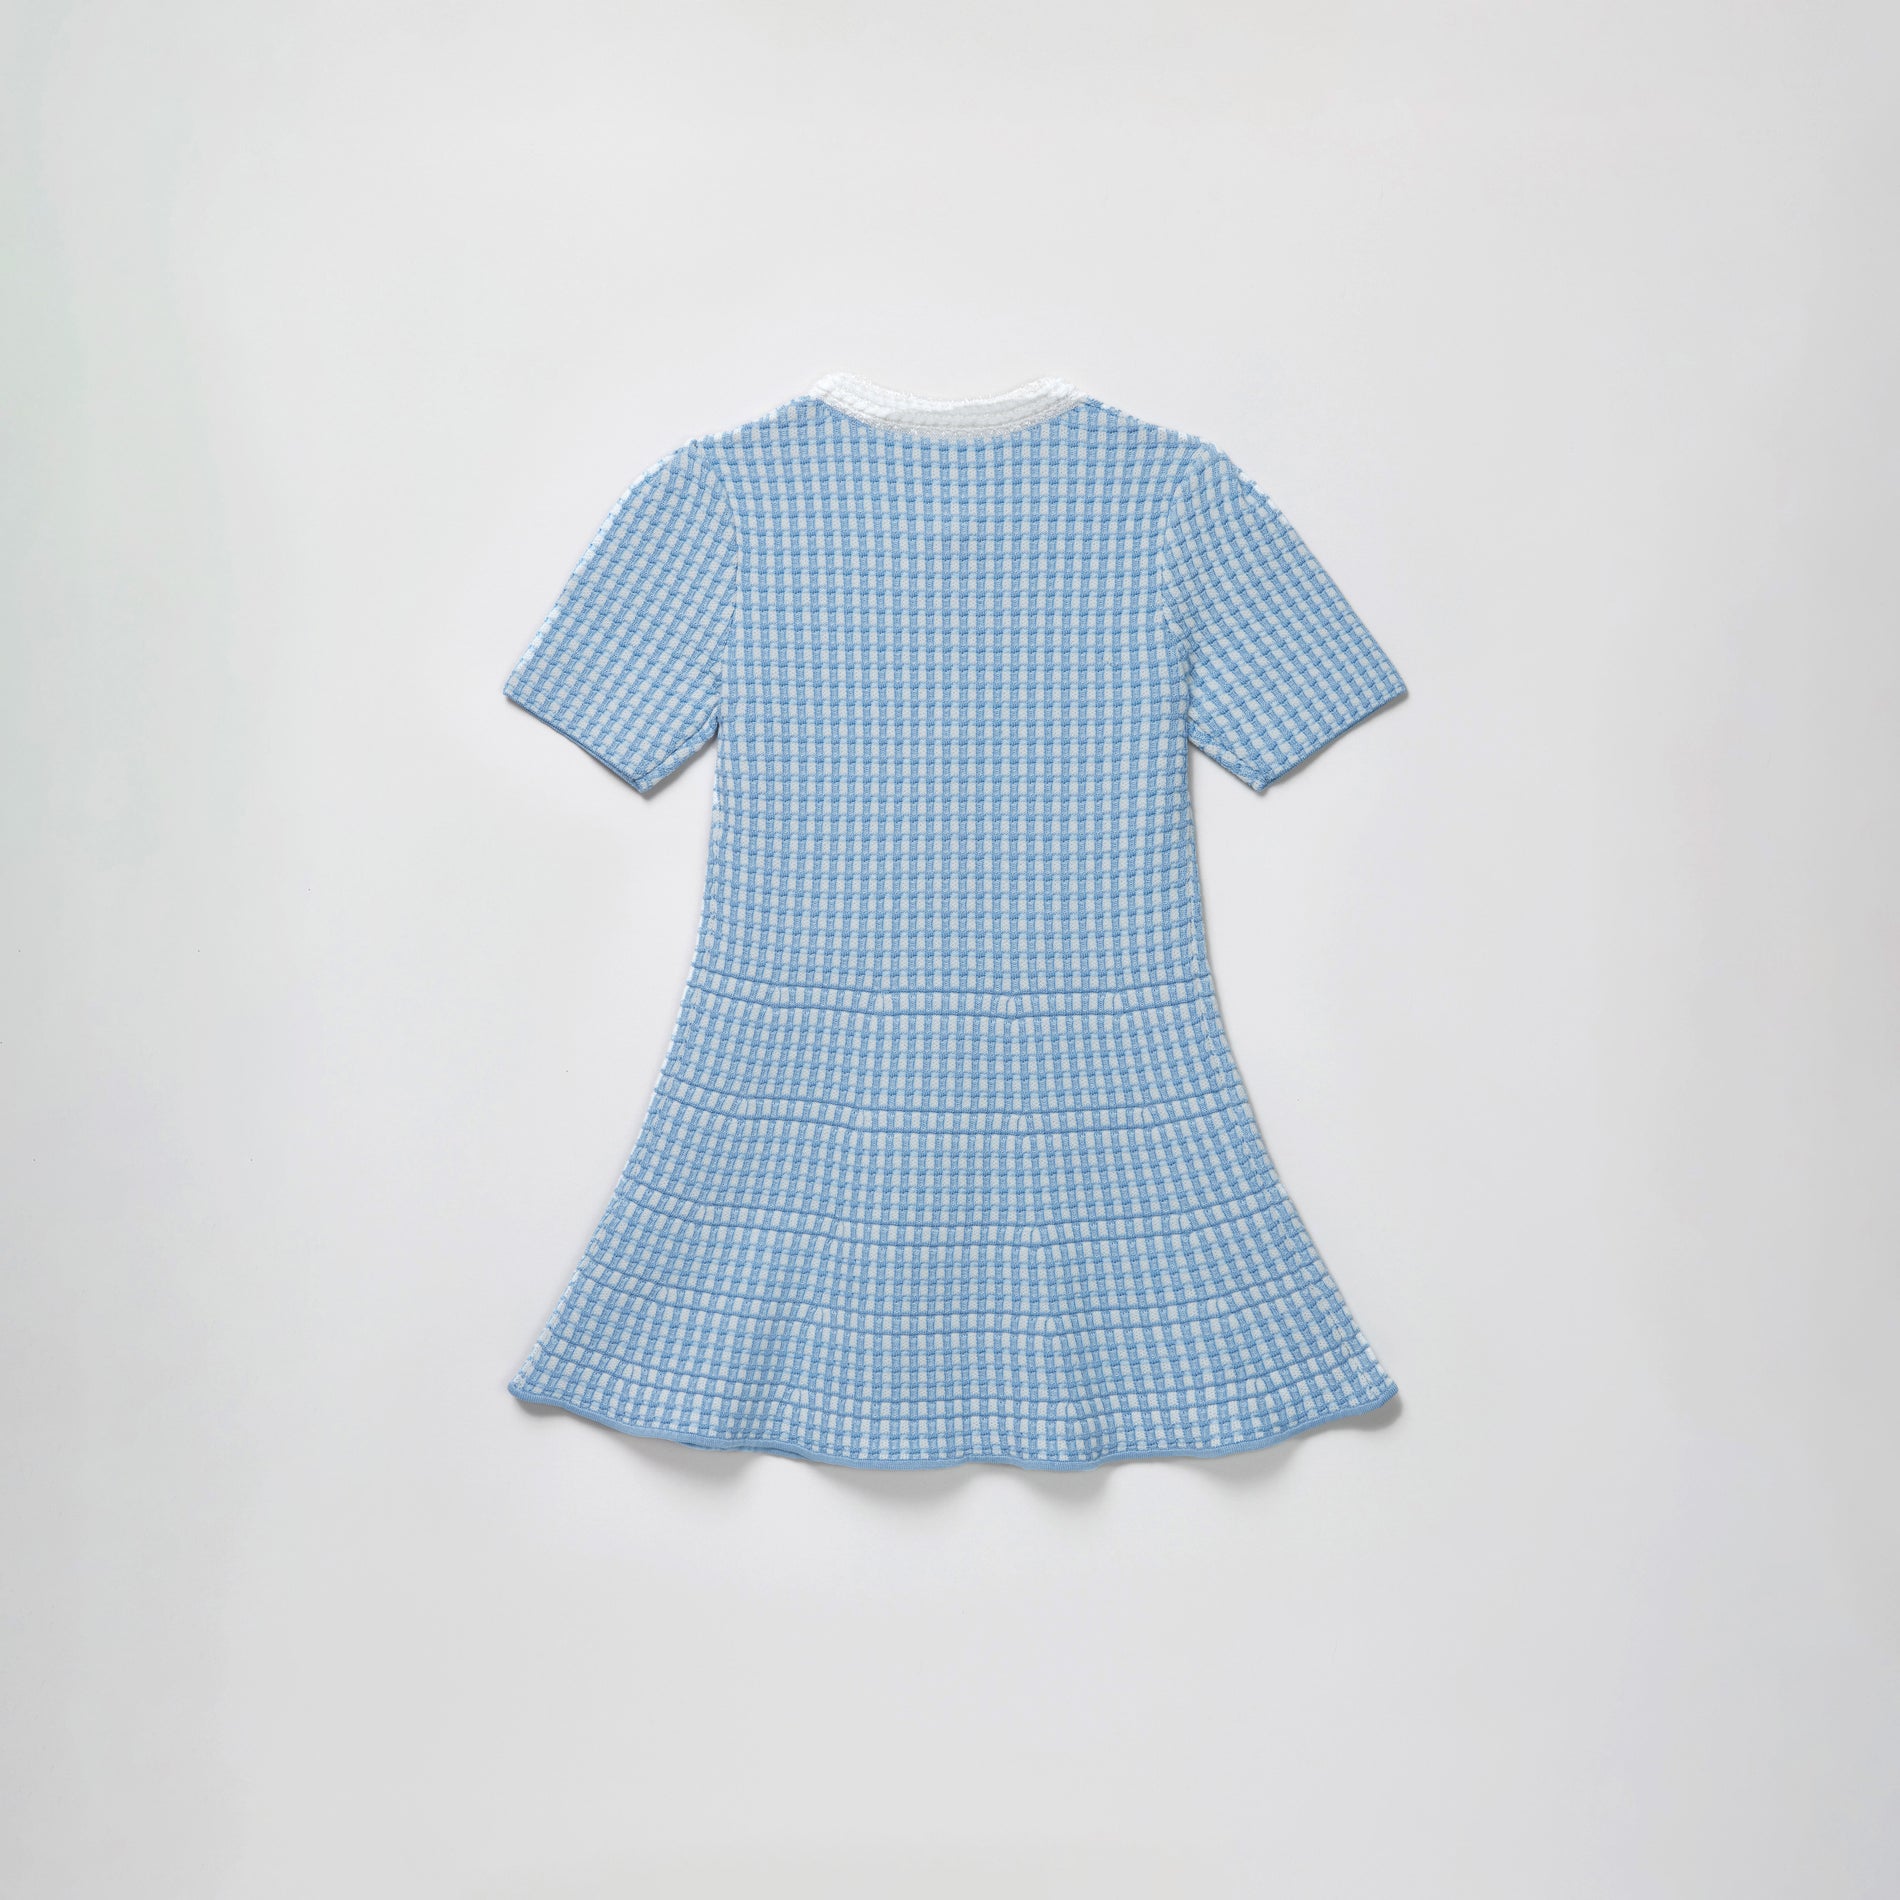 Blue Knit Dress